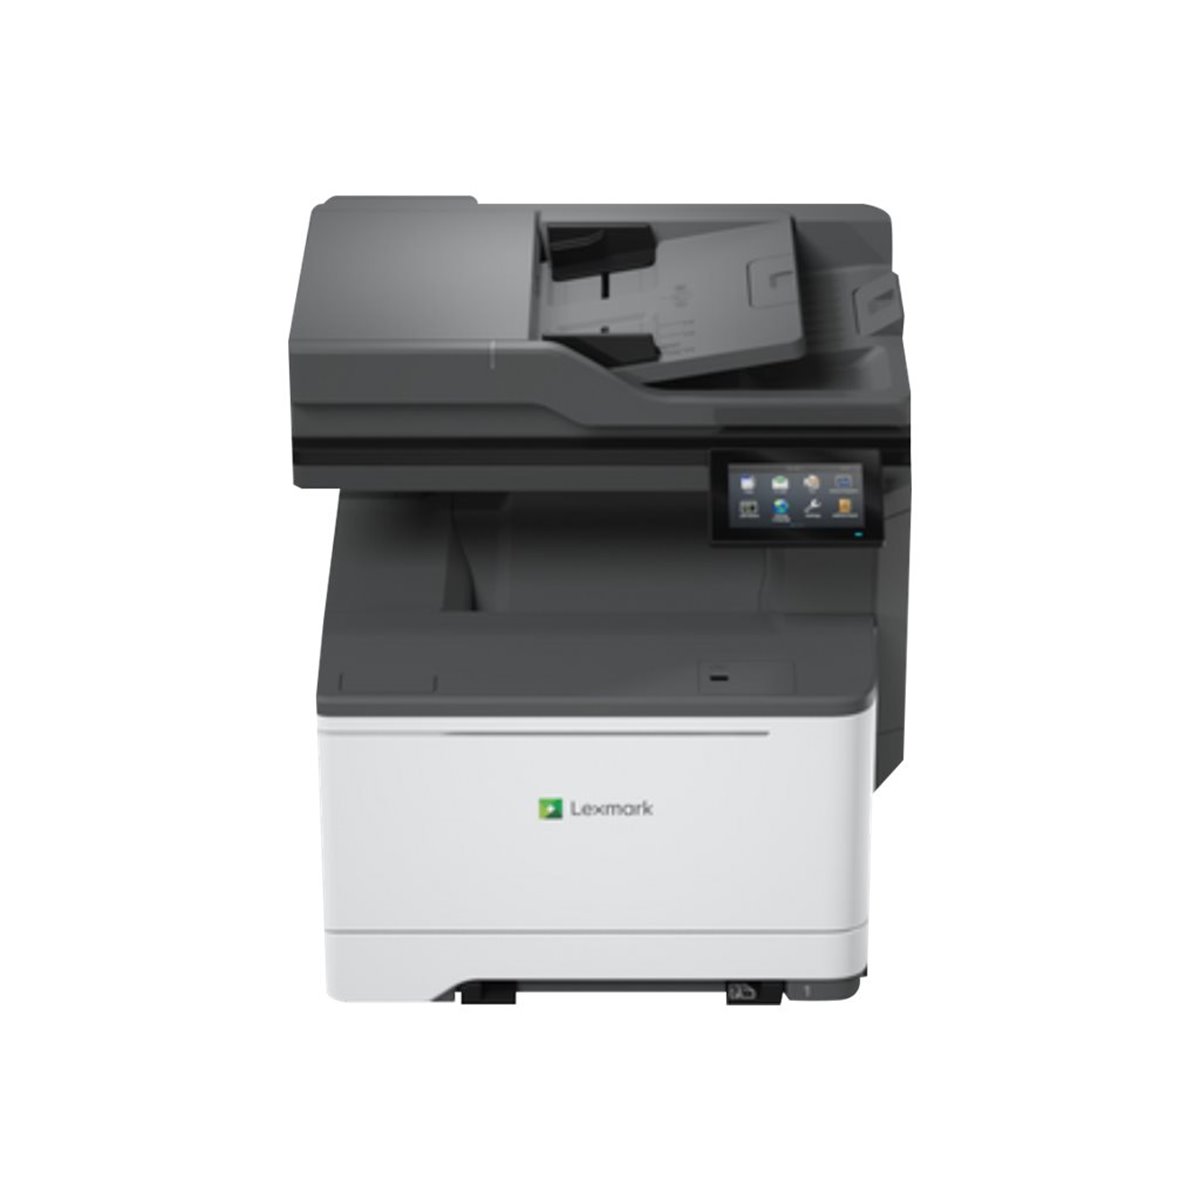 Lexmark CX532adwe Color Multifunction Printer HV EMEA 33ppm - Printer - Colored